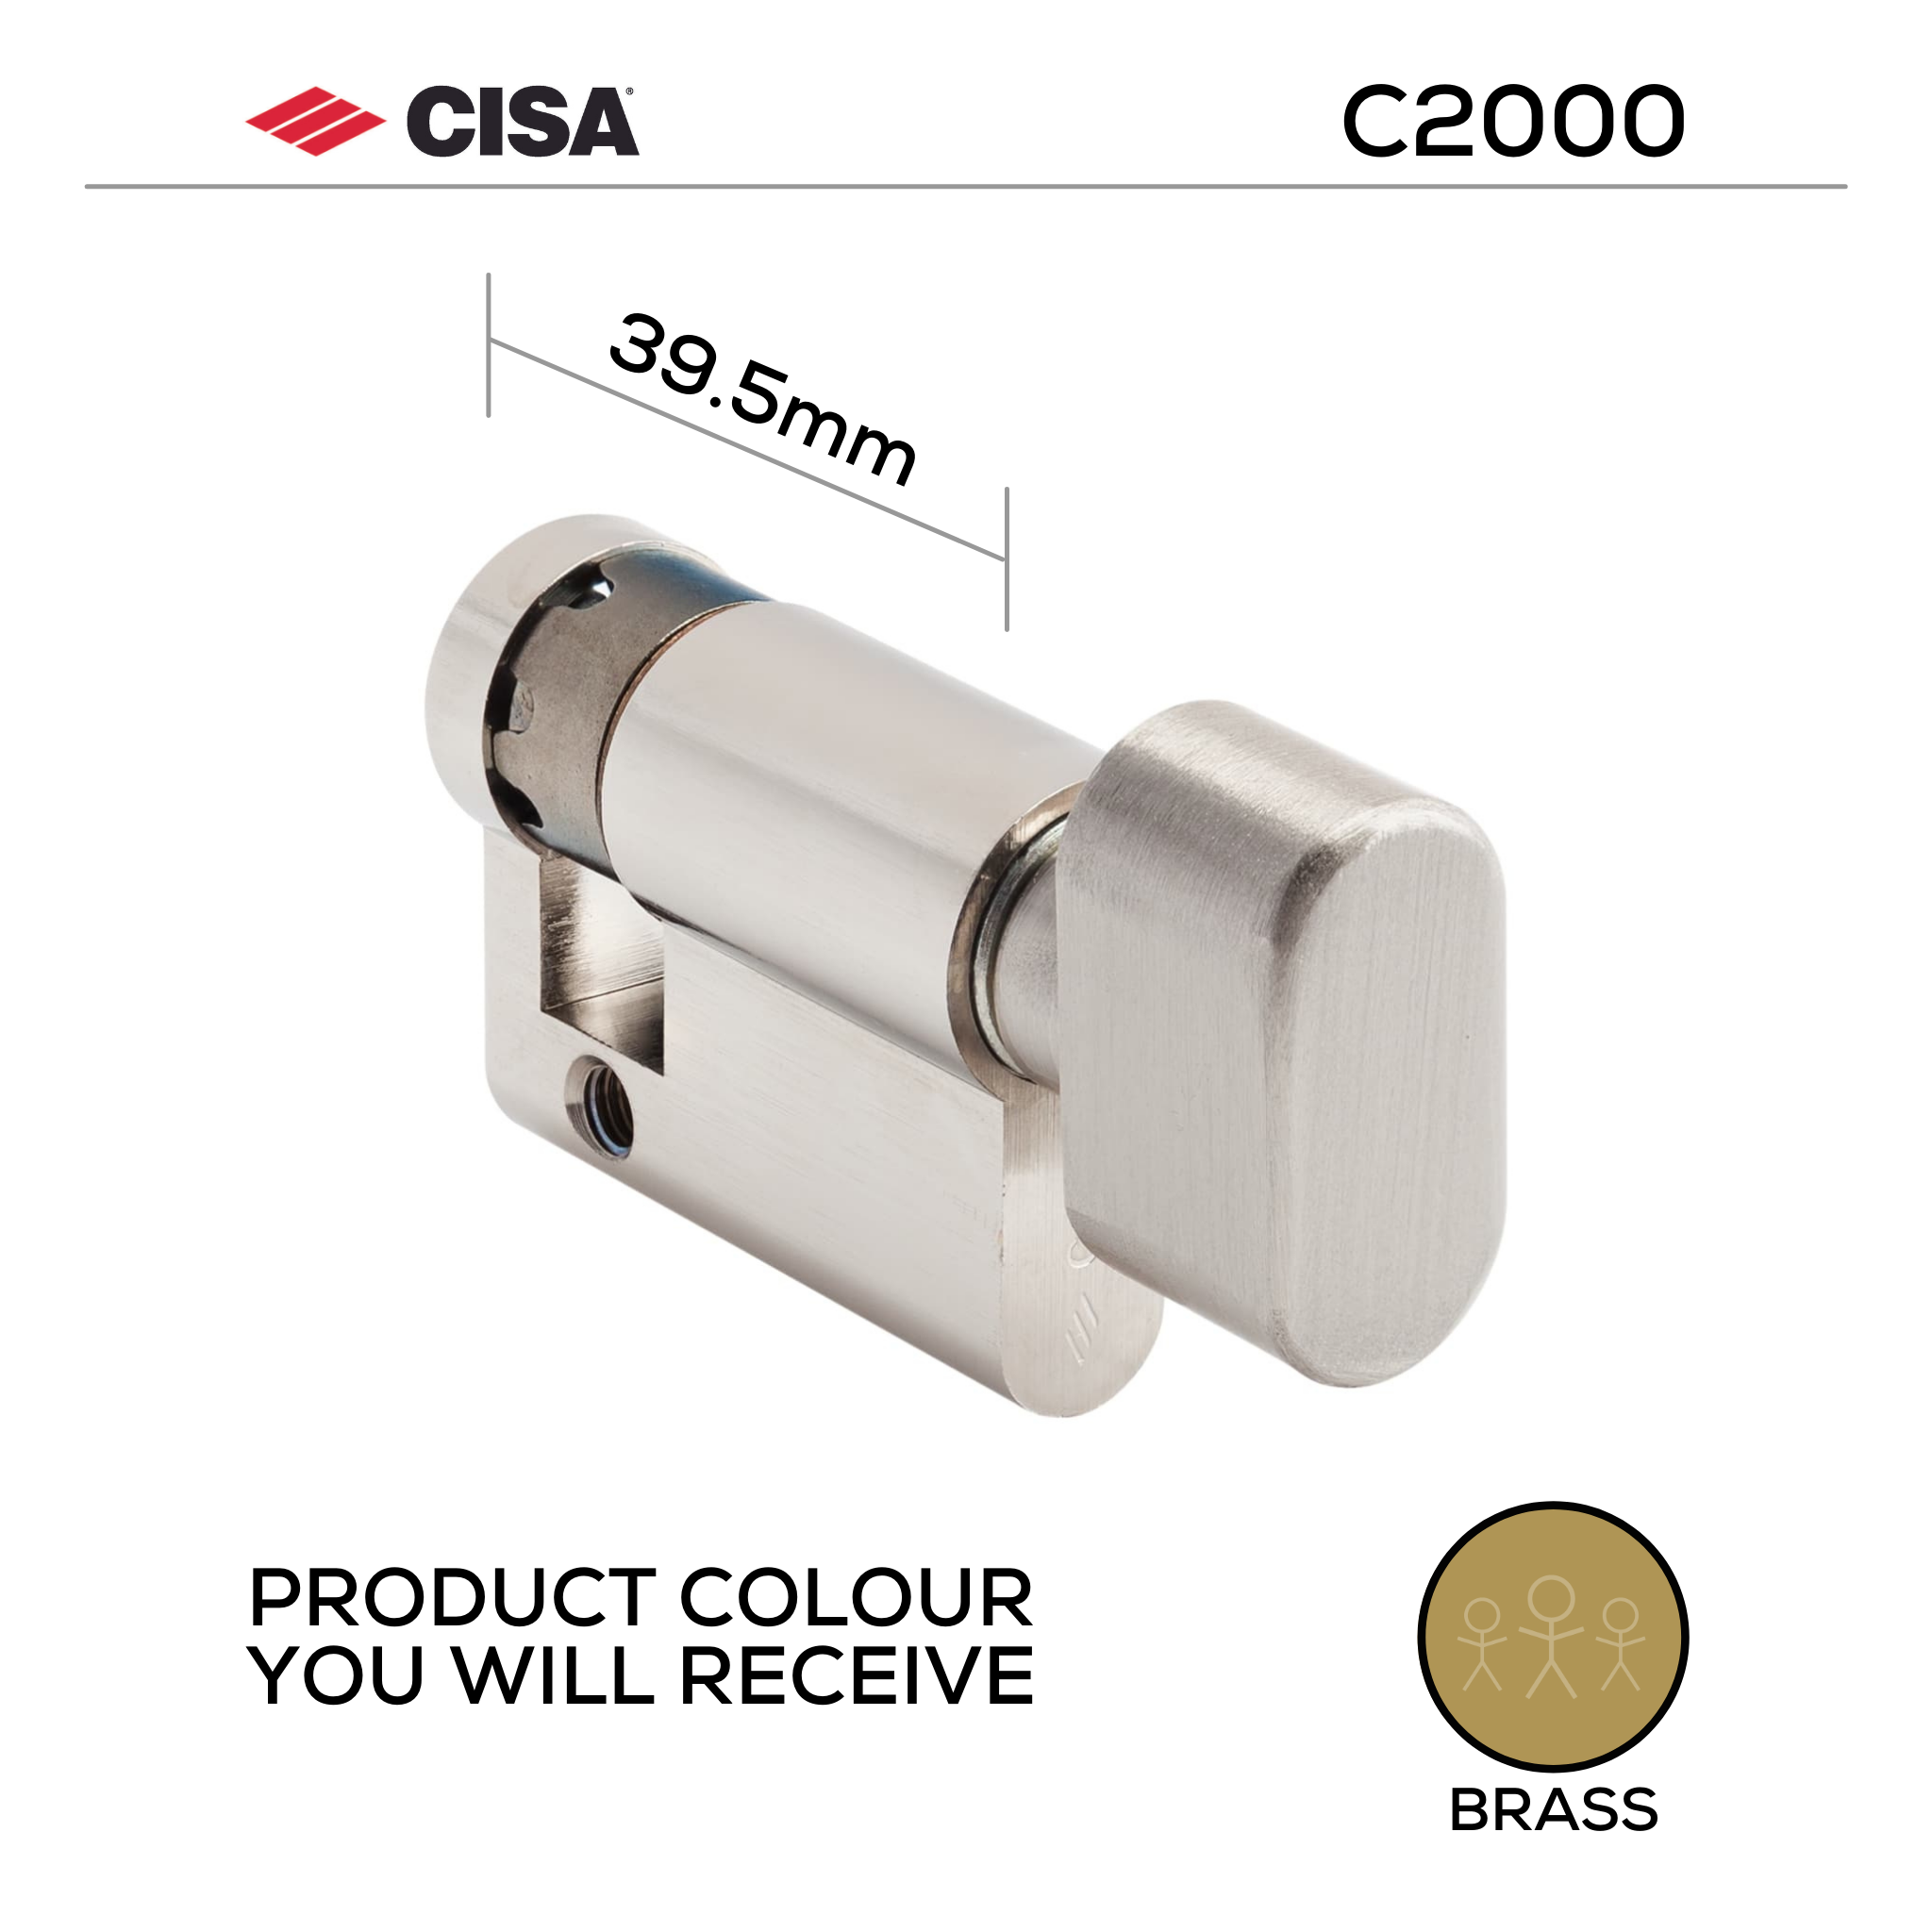 08559-04-00-KD, 39,5mm - 29.5/10, Half (Single Cylinder), C2000, Thumbturn, Keyed to Differ (Standard), Brass, CISA